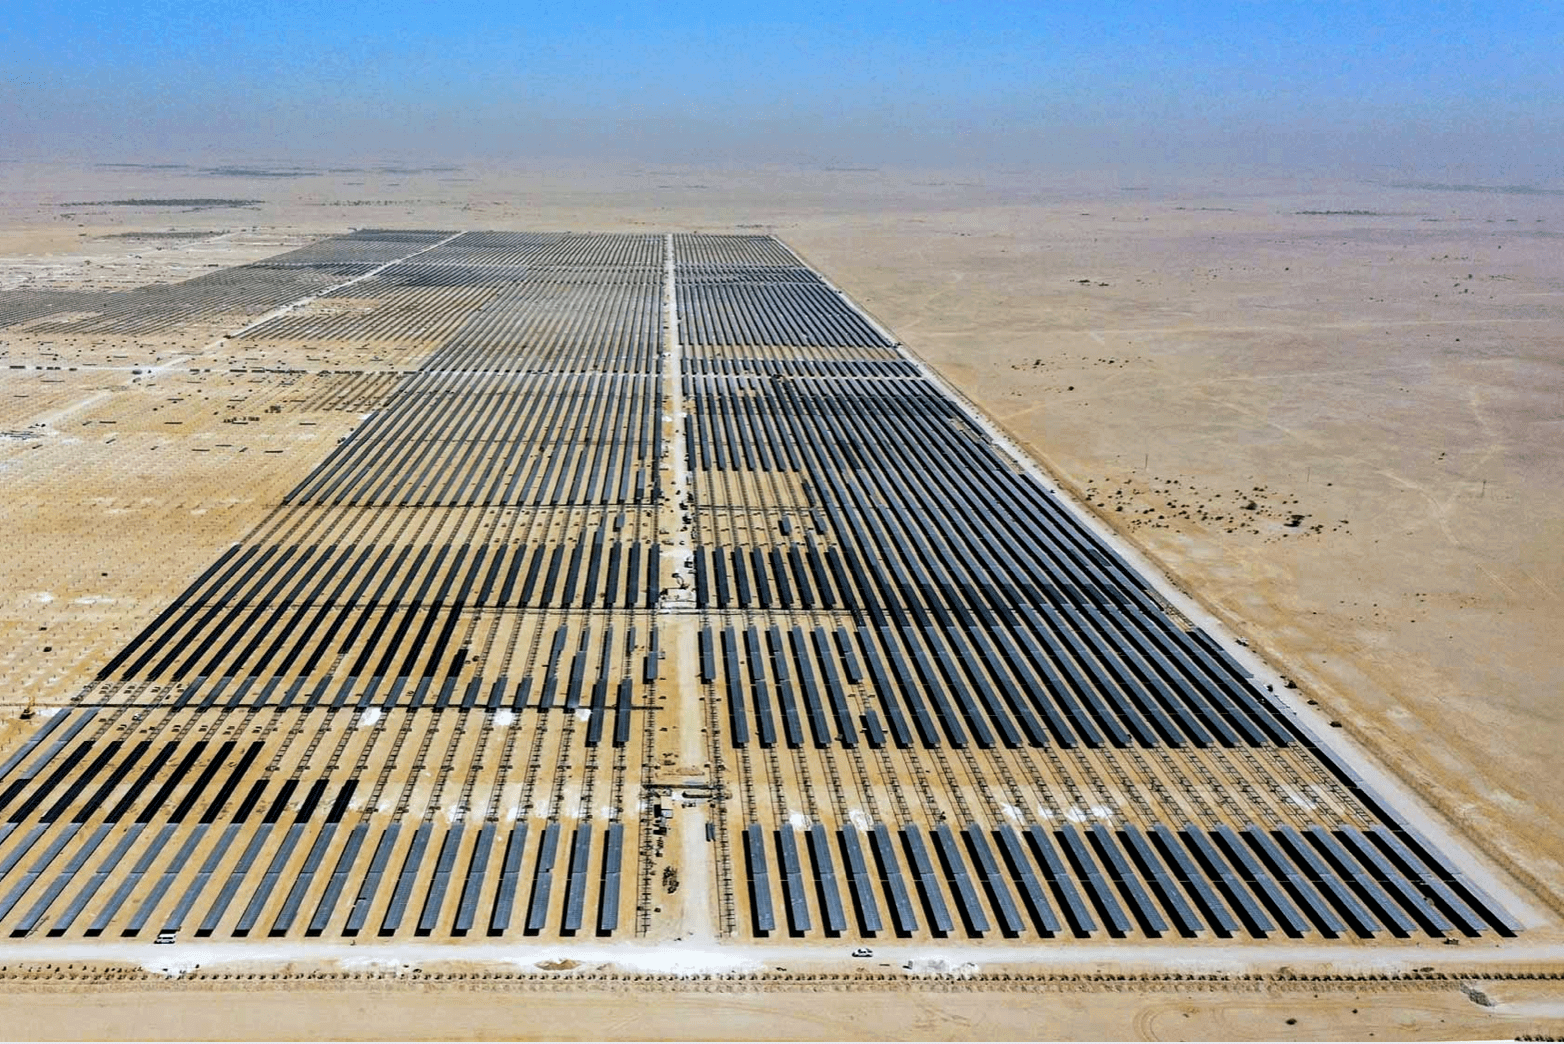 Aerial view of solar field in desert region